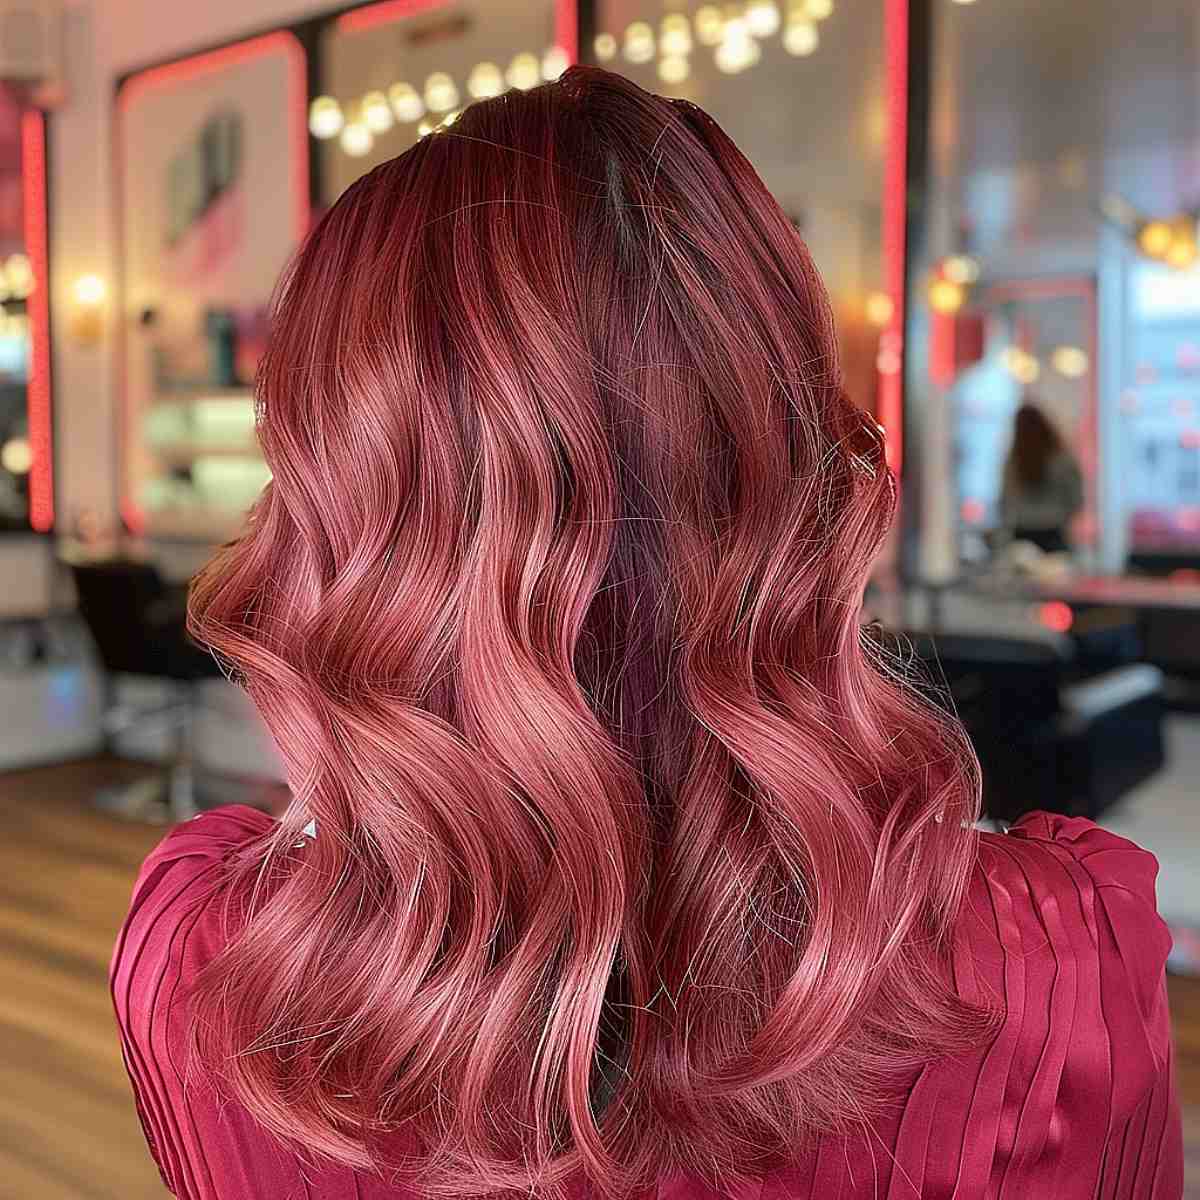 Red Hair and Rose Gold Balayage